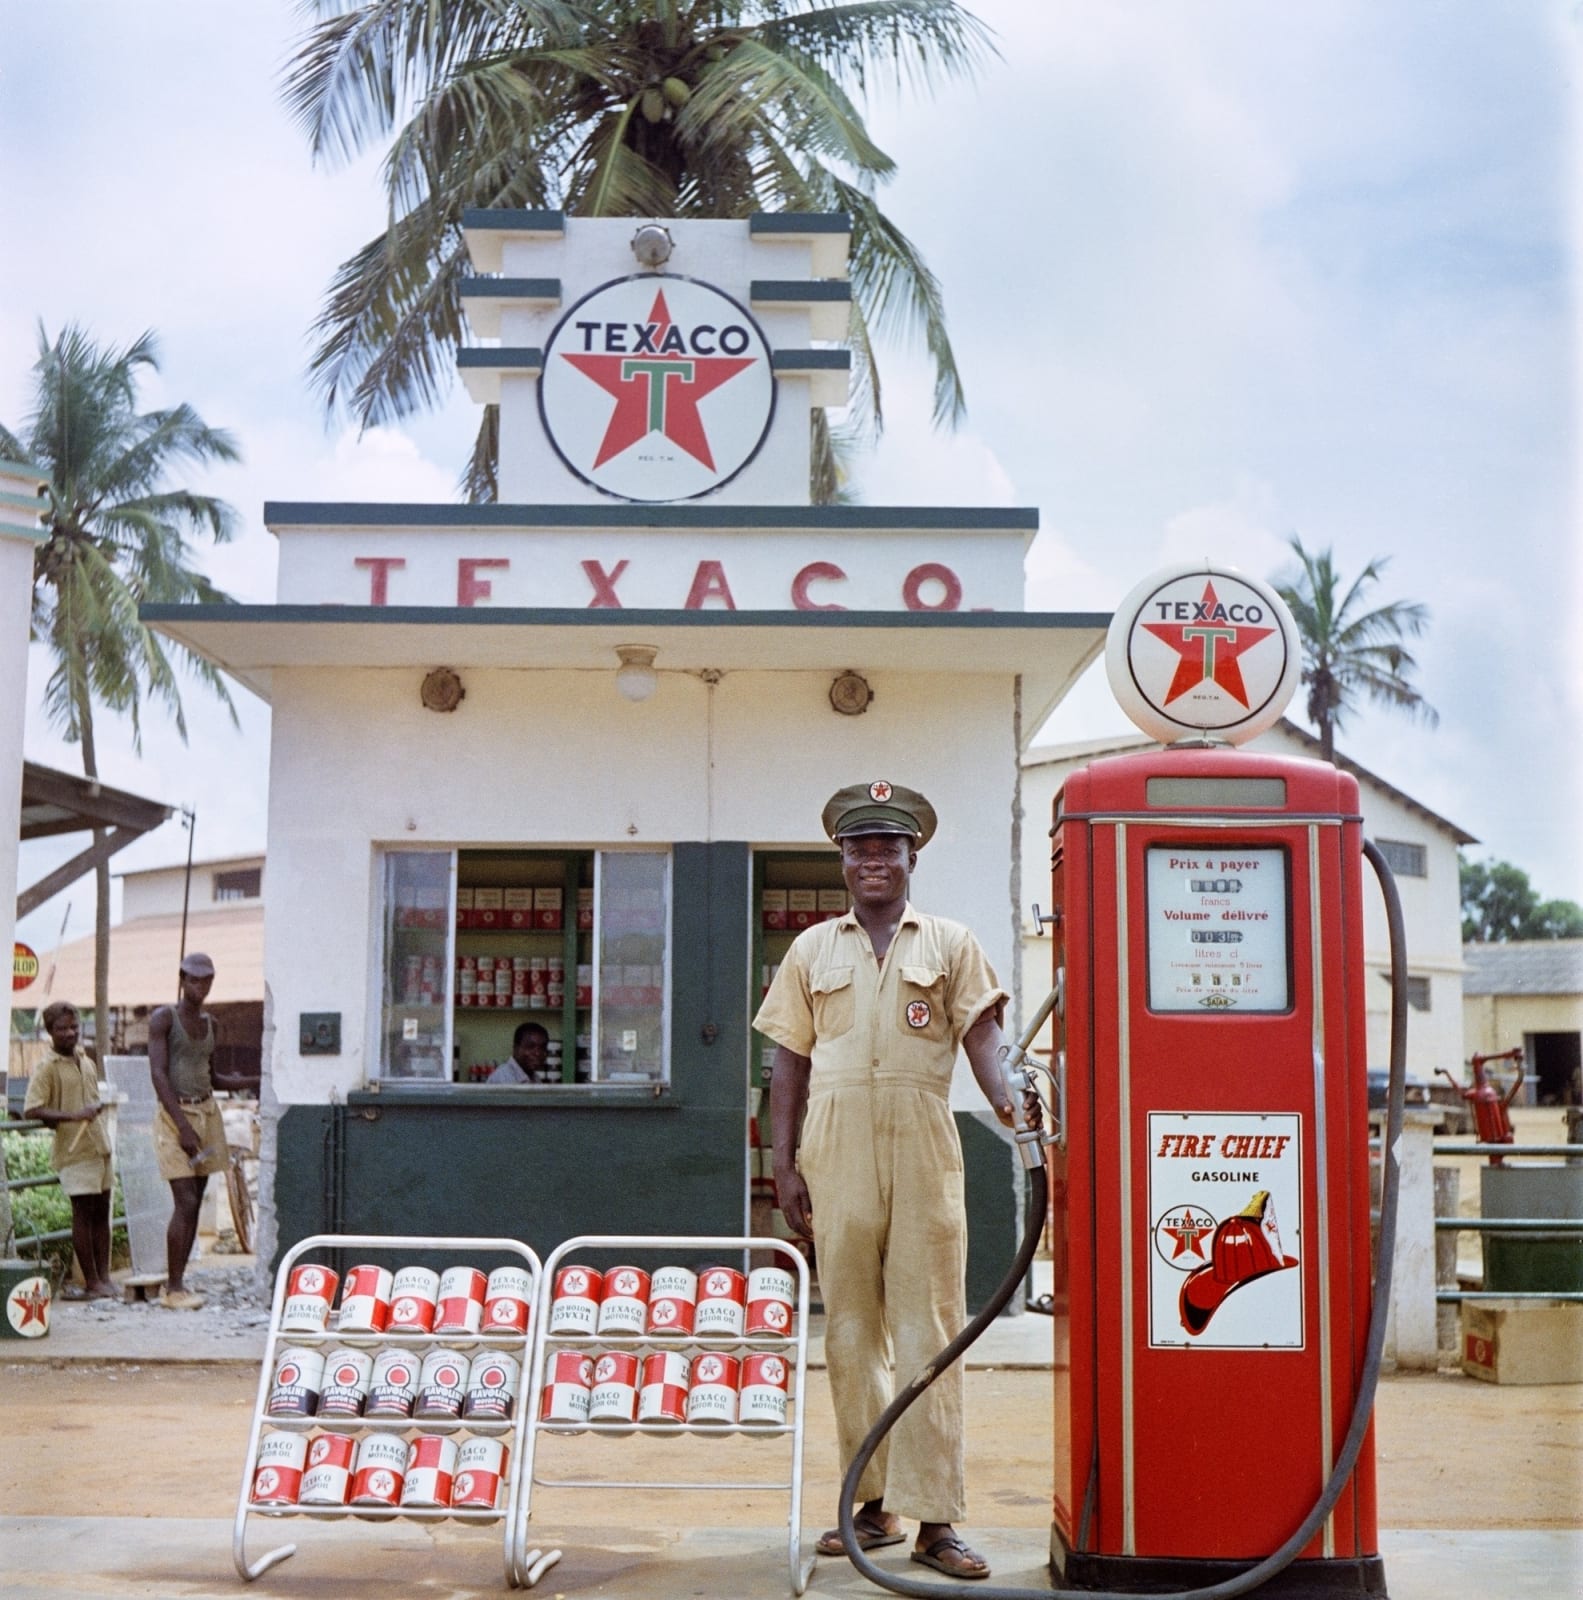 Todd Webb, Togo Texaco Man, 1958